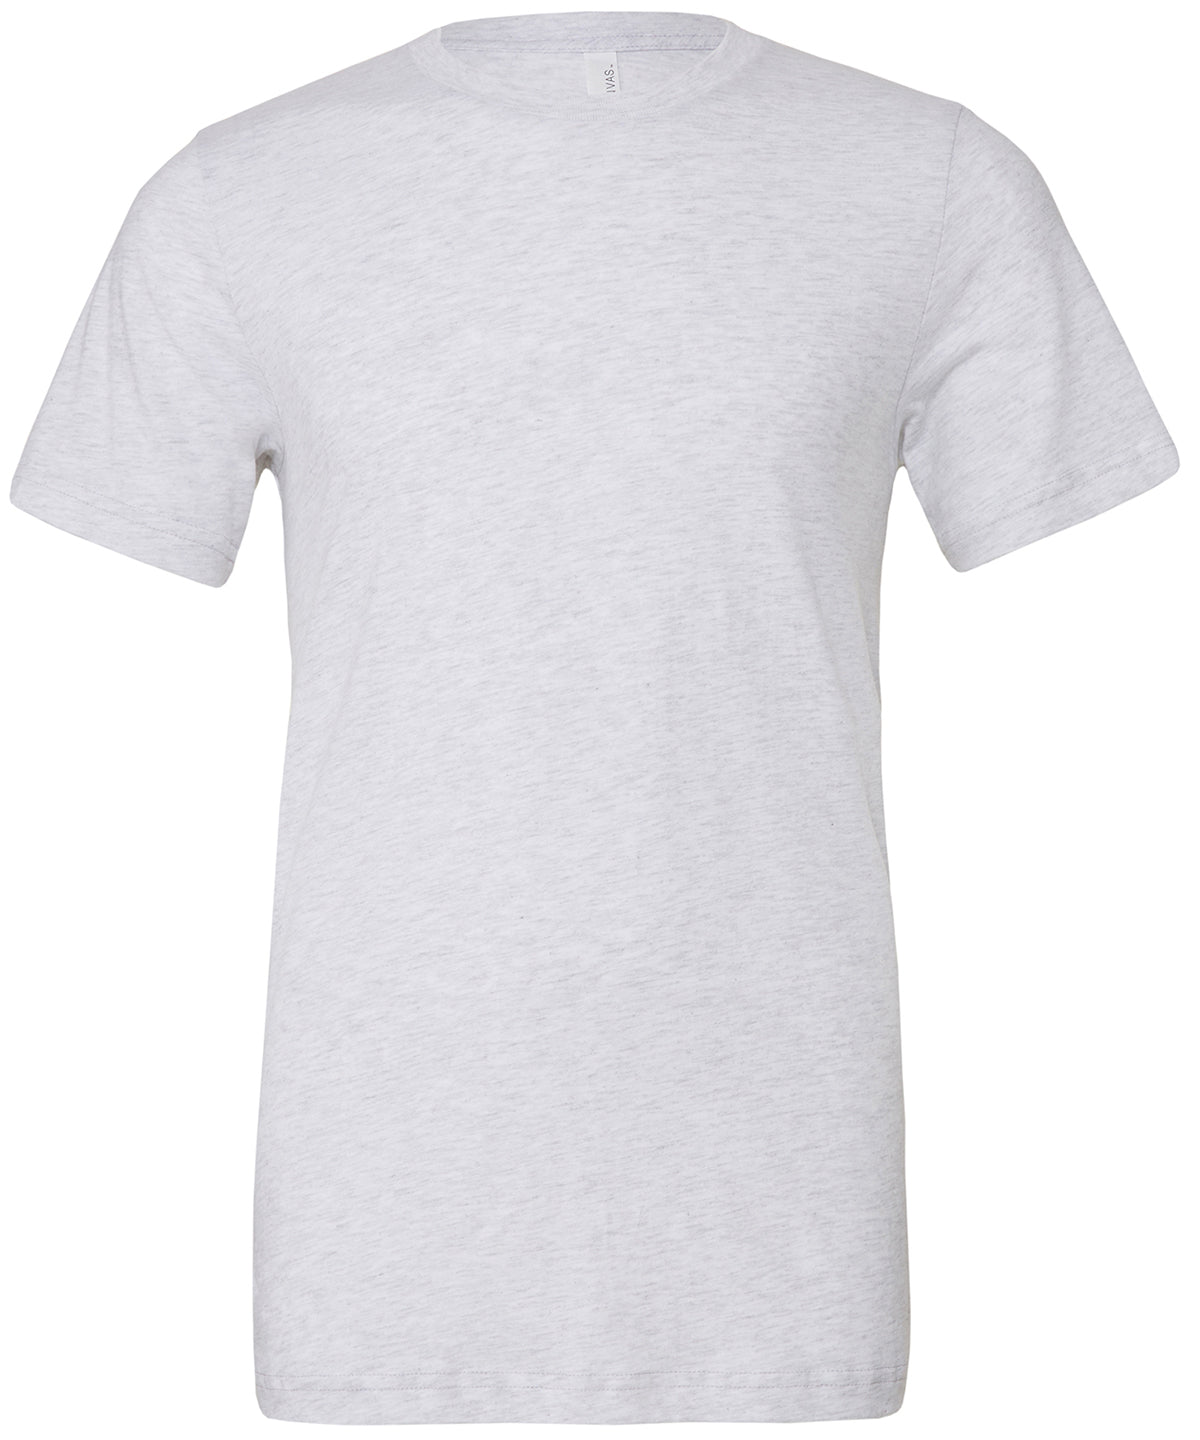 Unisex triblend crew neck t-shirt